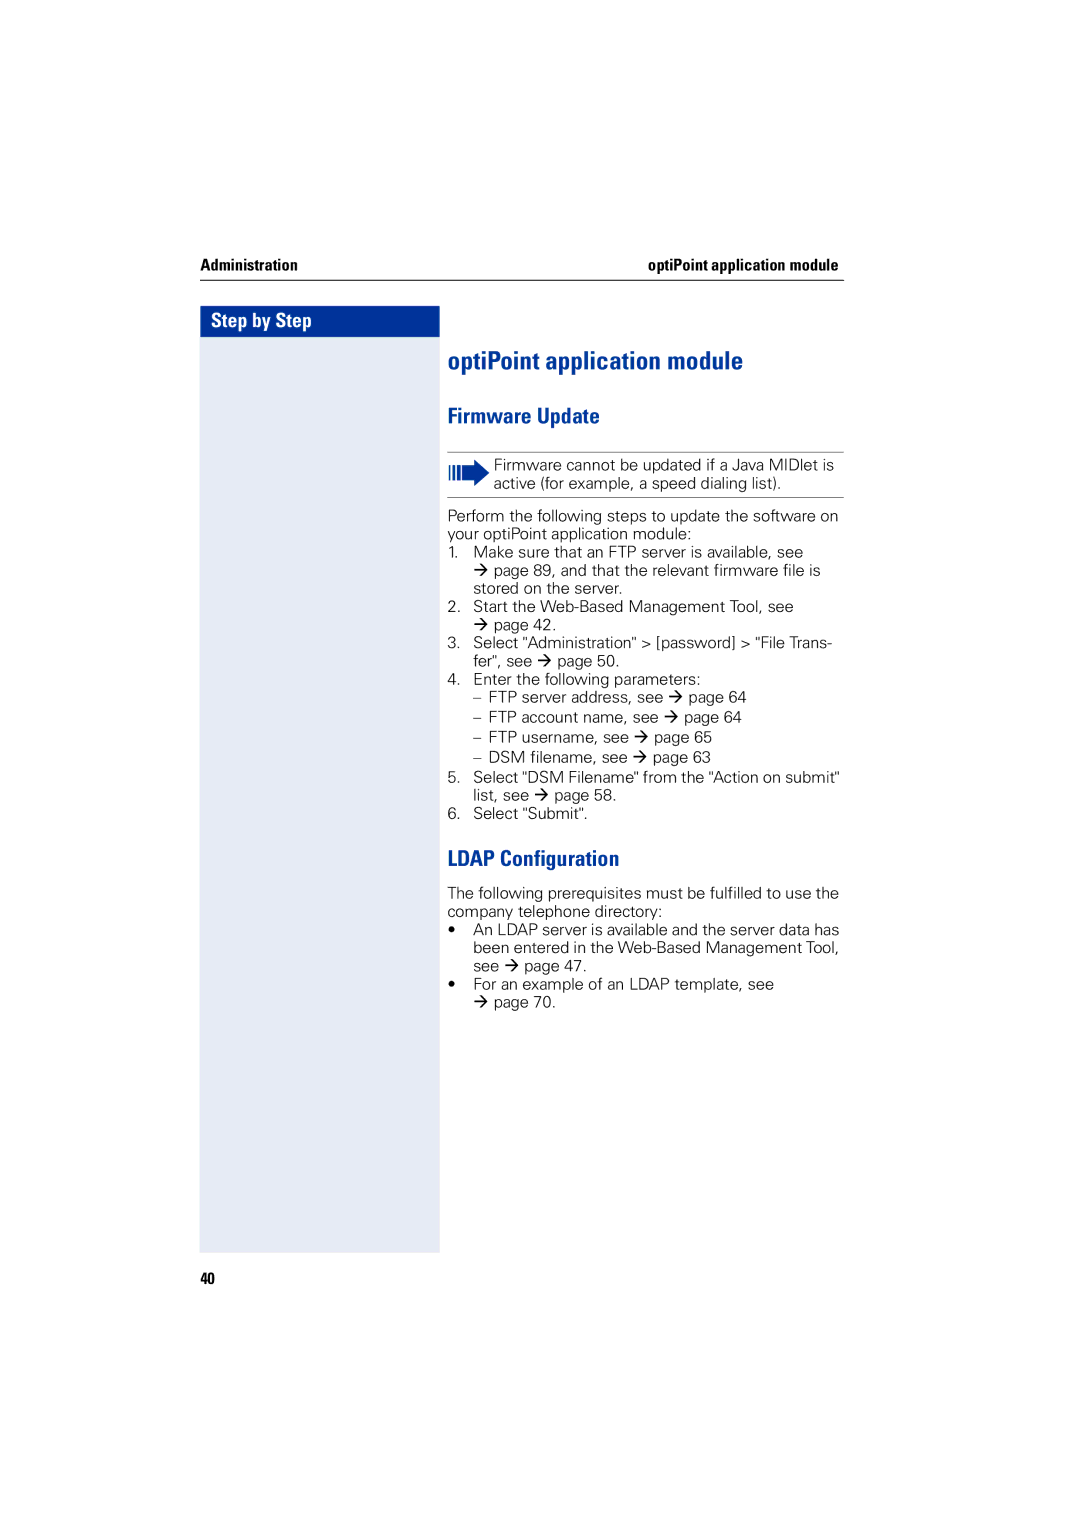 Siemens 2000 manual OptiPoint application module 